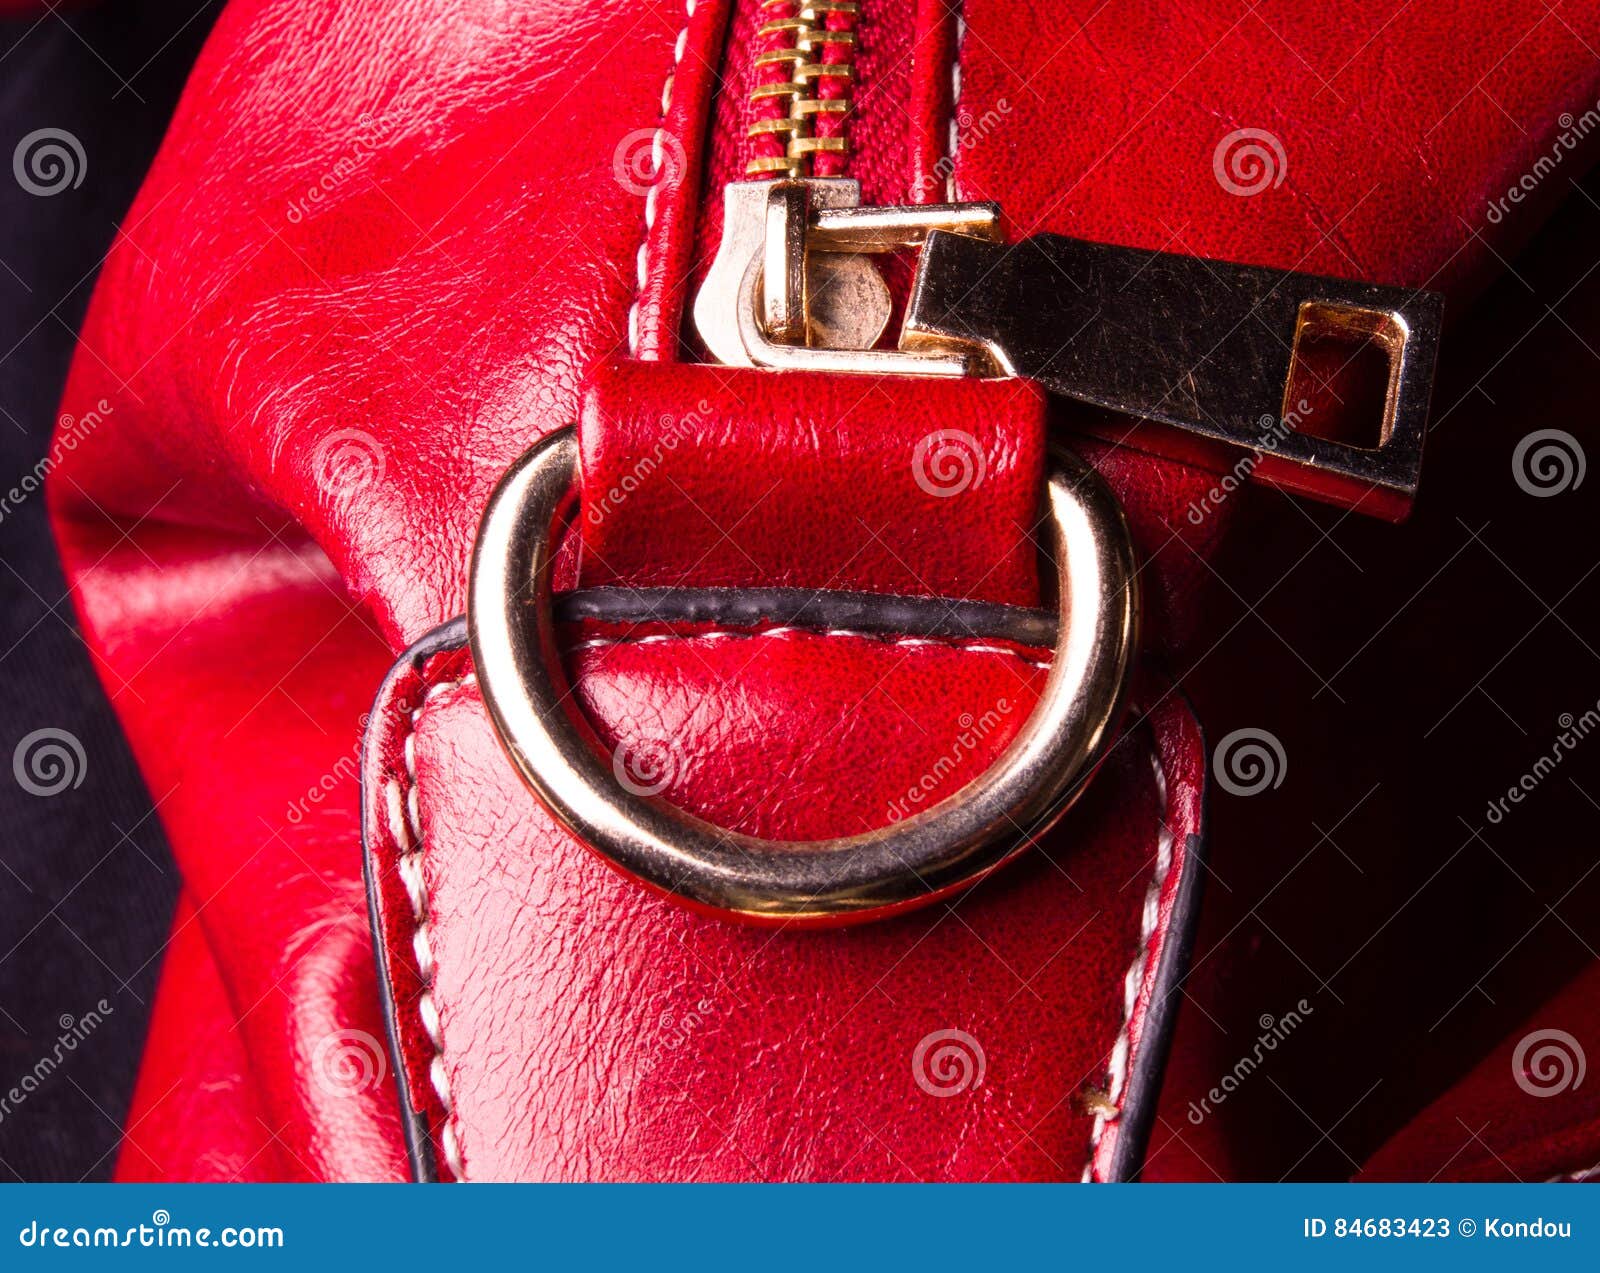 Seams on leather hand bag stock image. Image of handle - 84683423